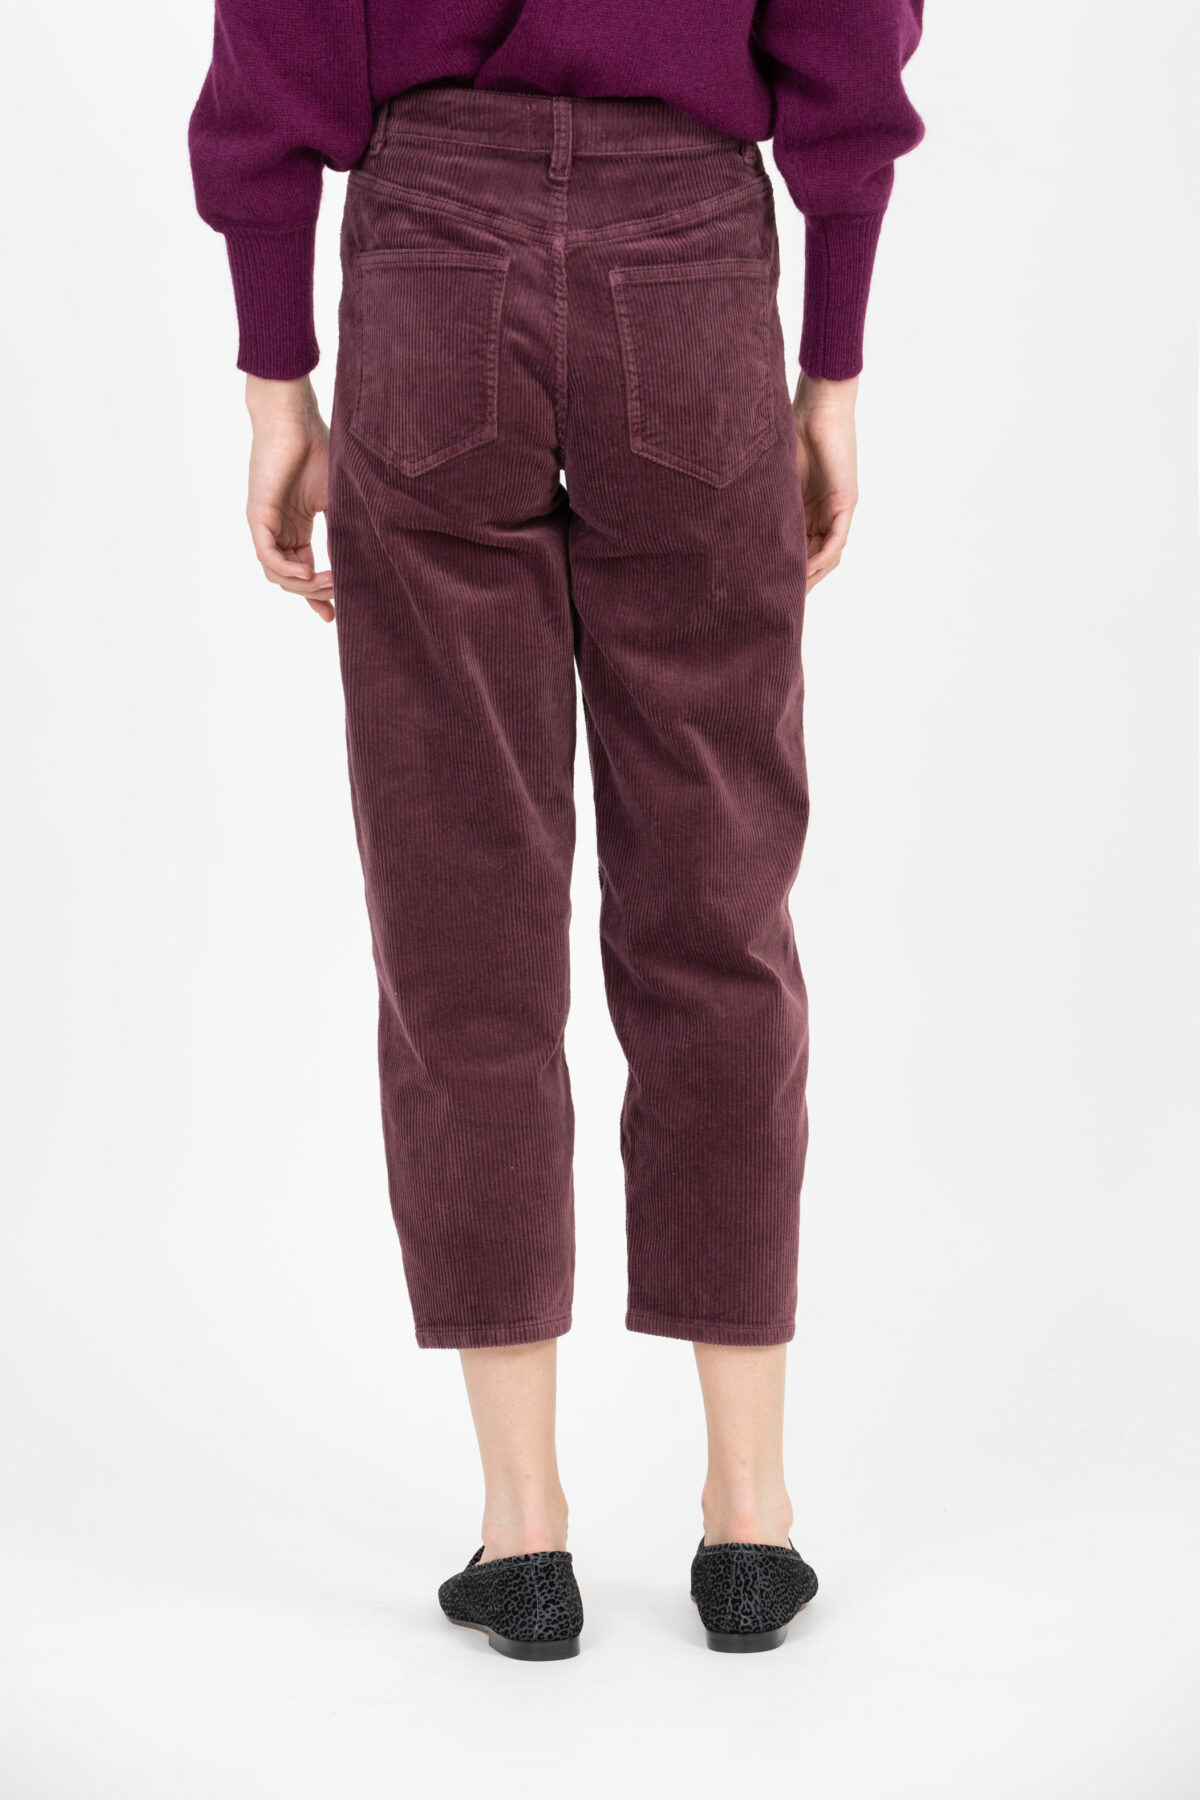 telma-aubergine-velvet-corduroy-pants-labdip-curve-high-waist-cropped-matchboxathens